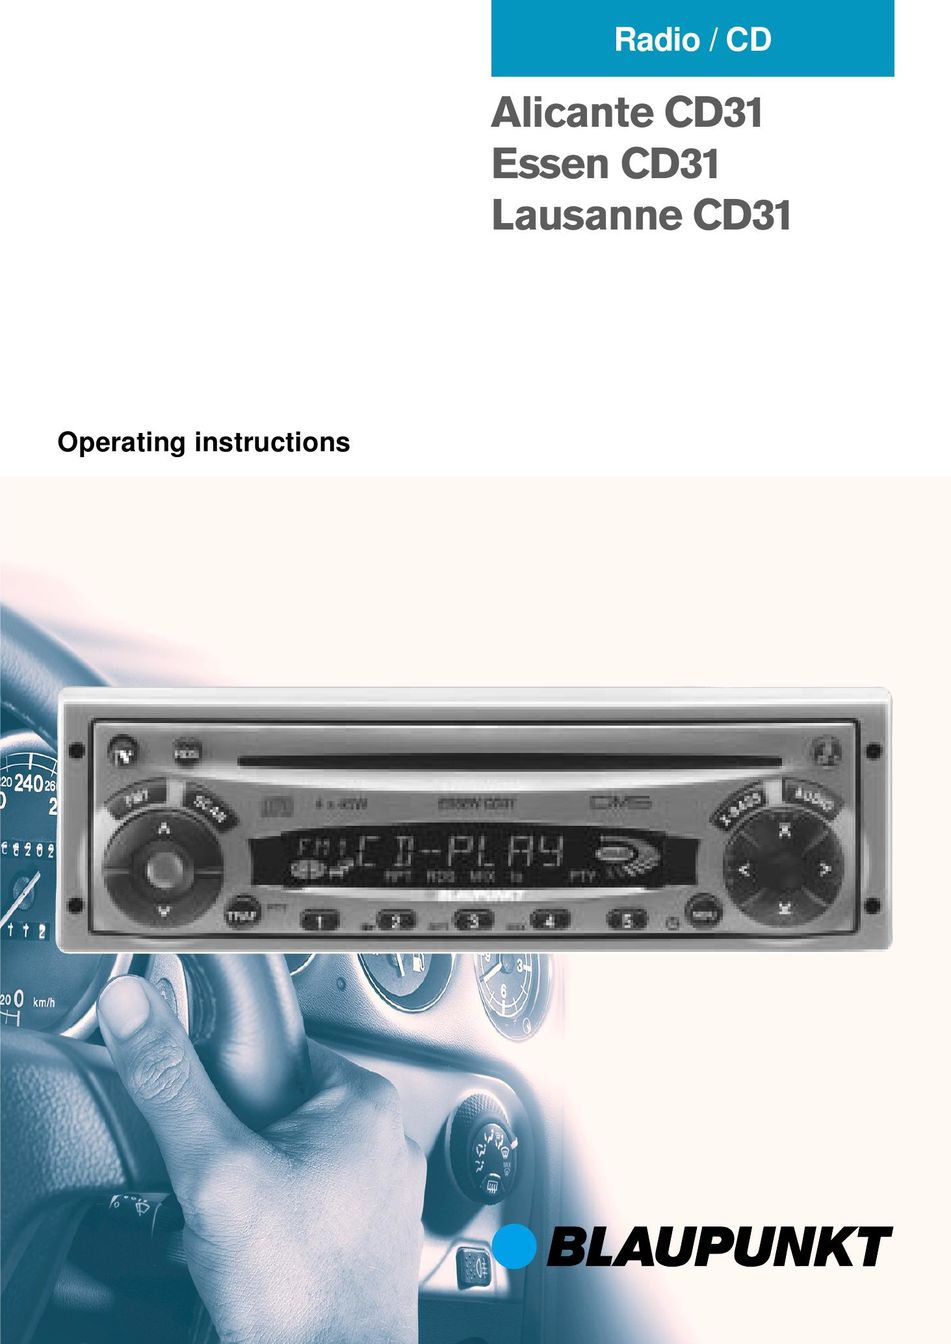 Blaupunkt Alicante CD31 Car Stereo System User Manual